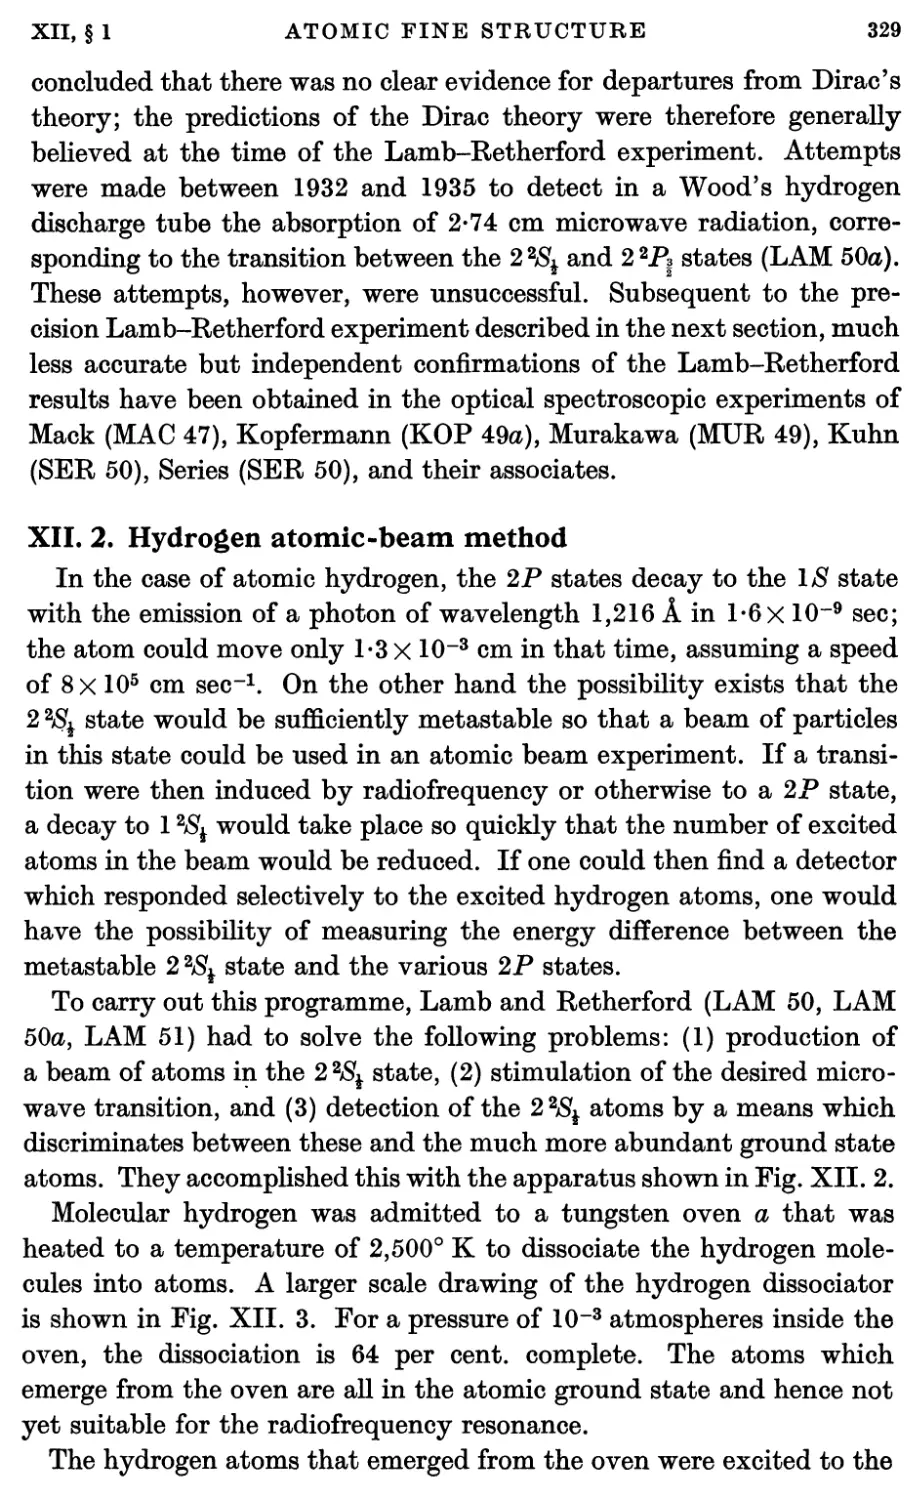 XII.2. Hydrogen Atomic-beam Method